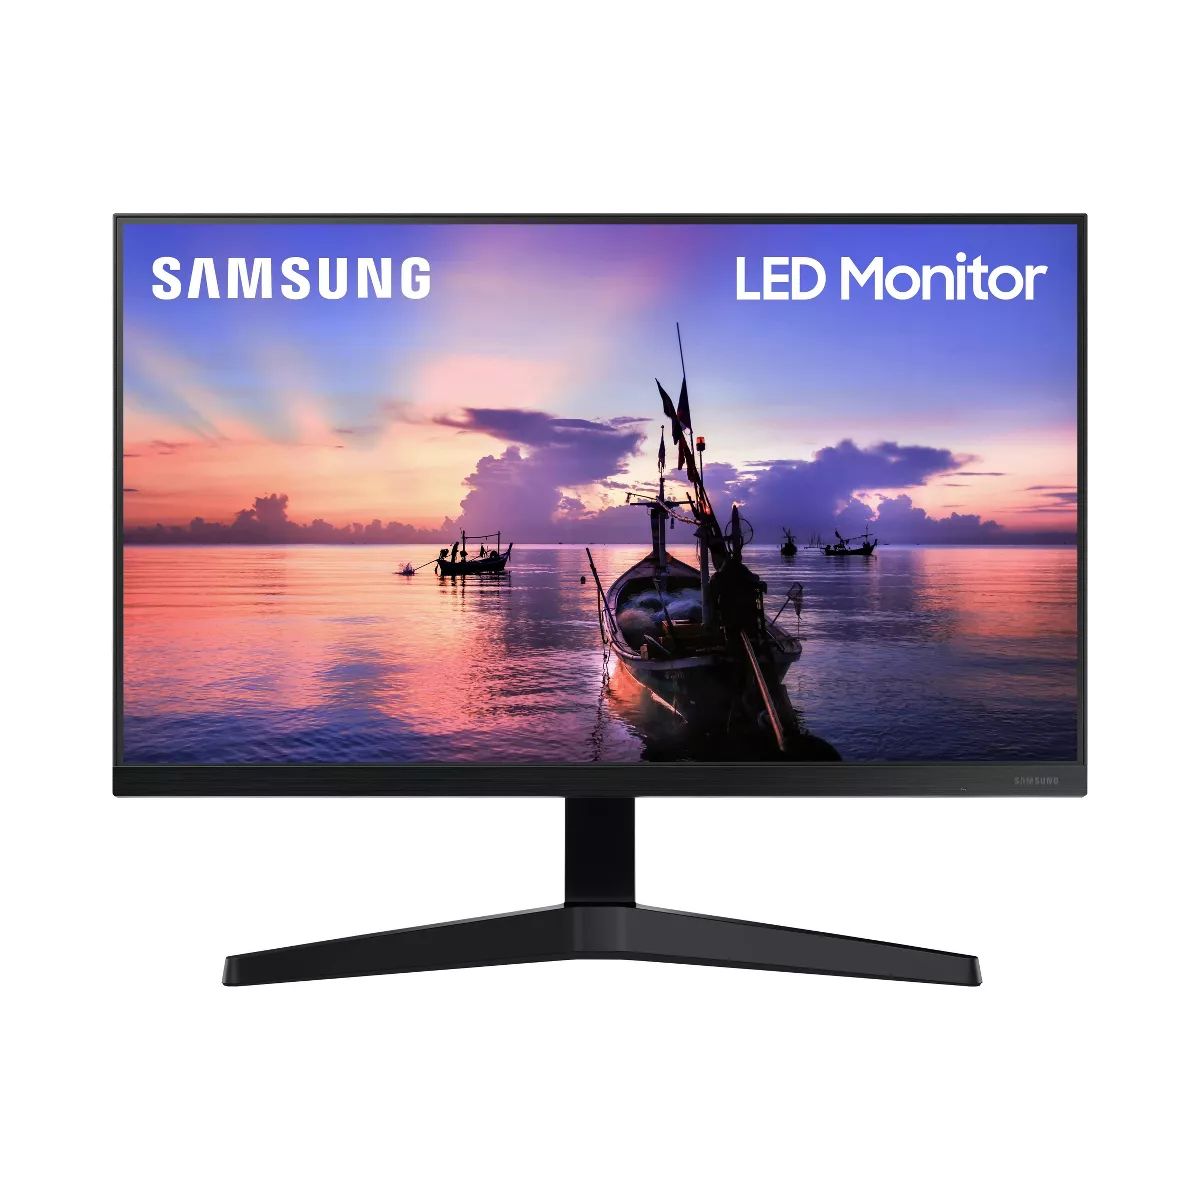 Samsung 24" FHD IPS Computer Monitor, AMD FreeSync,  HDMI & VGA (T350 Series) - Dark Blue/Gray | Target